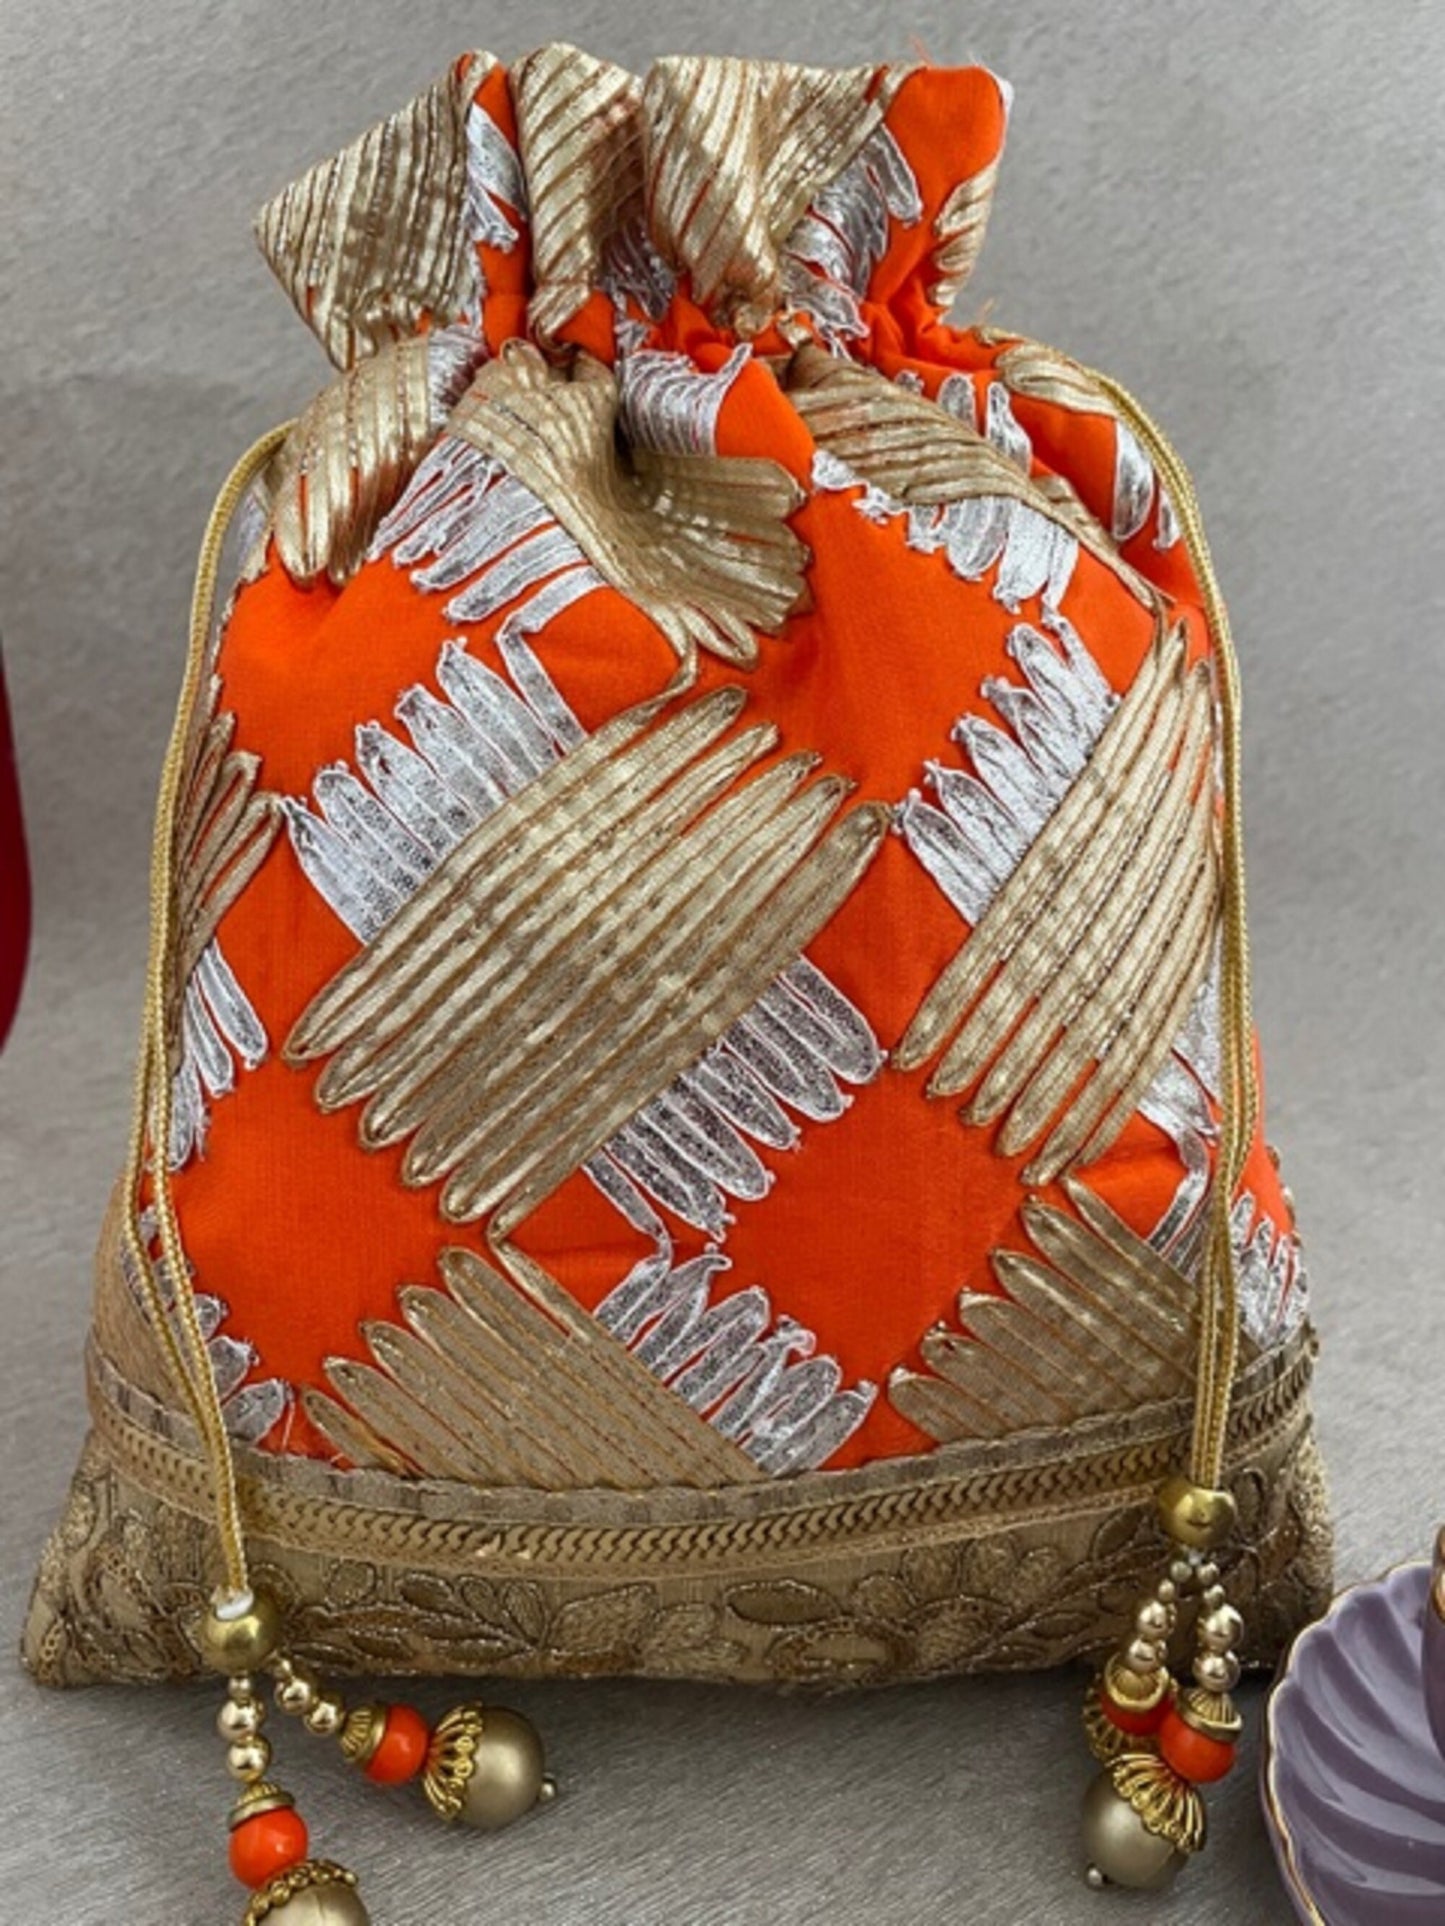 One Large Potli Bidd Mewa Bag Three Colours to chose from Potli Drawstring Bags Wedding Favors Hens Night Bridemaids gifts Drawstring Gota